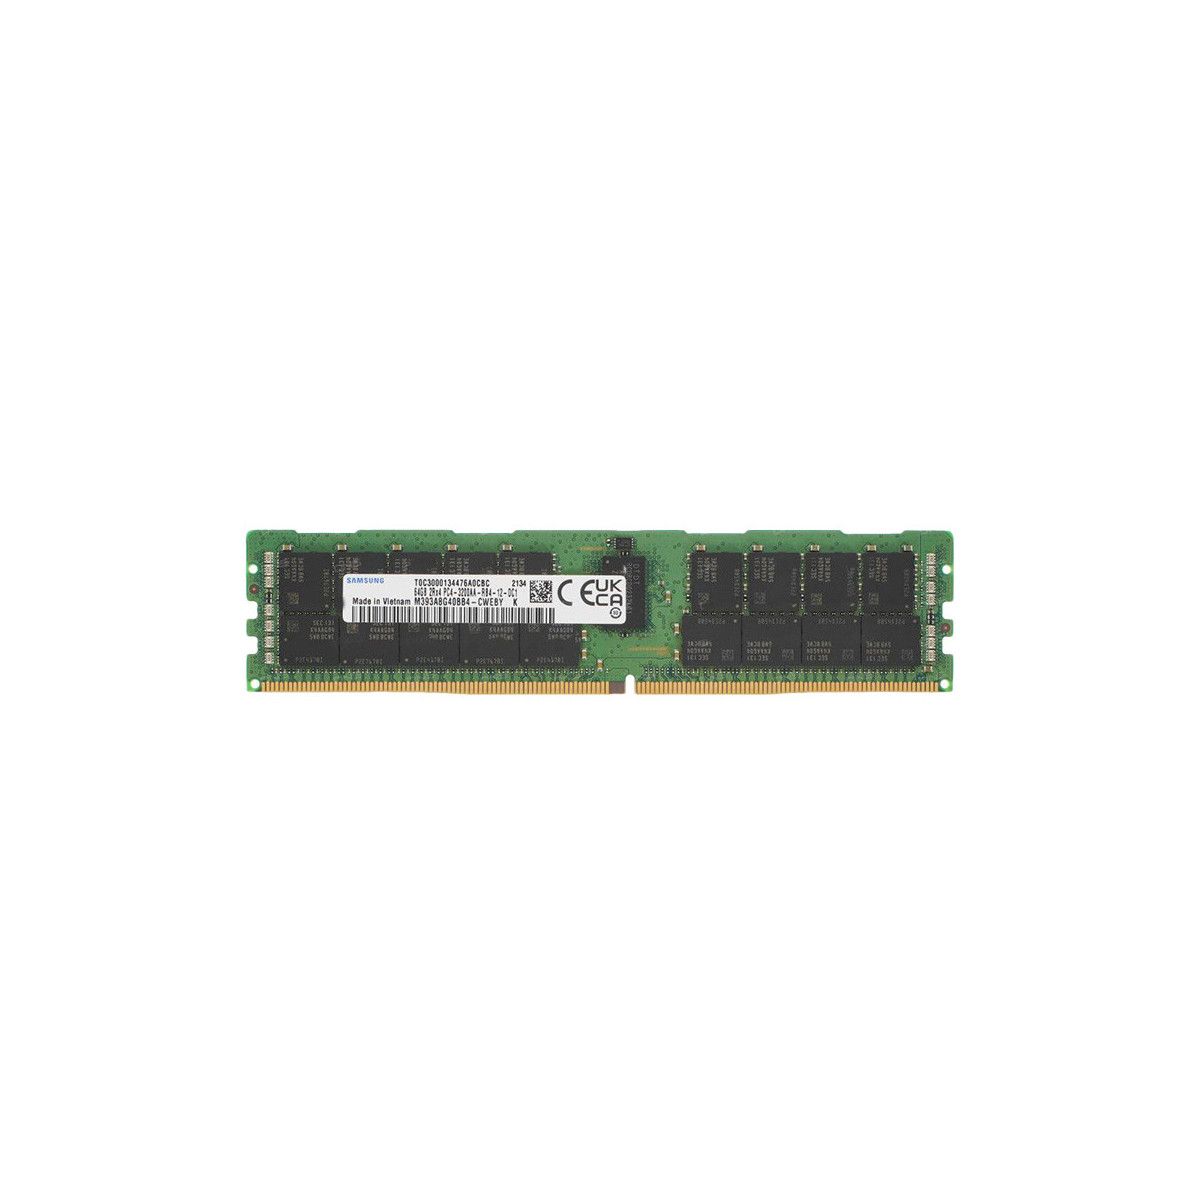 P2MYX-MS - Memstar 1x 64GB DDR4-3200 RDIMM PC4-25600R - OEM compatible con Mem-Star Memoria 1 - Memstar 